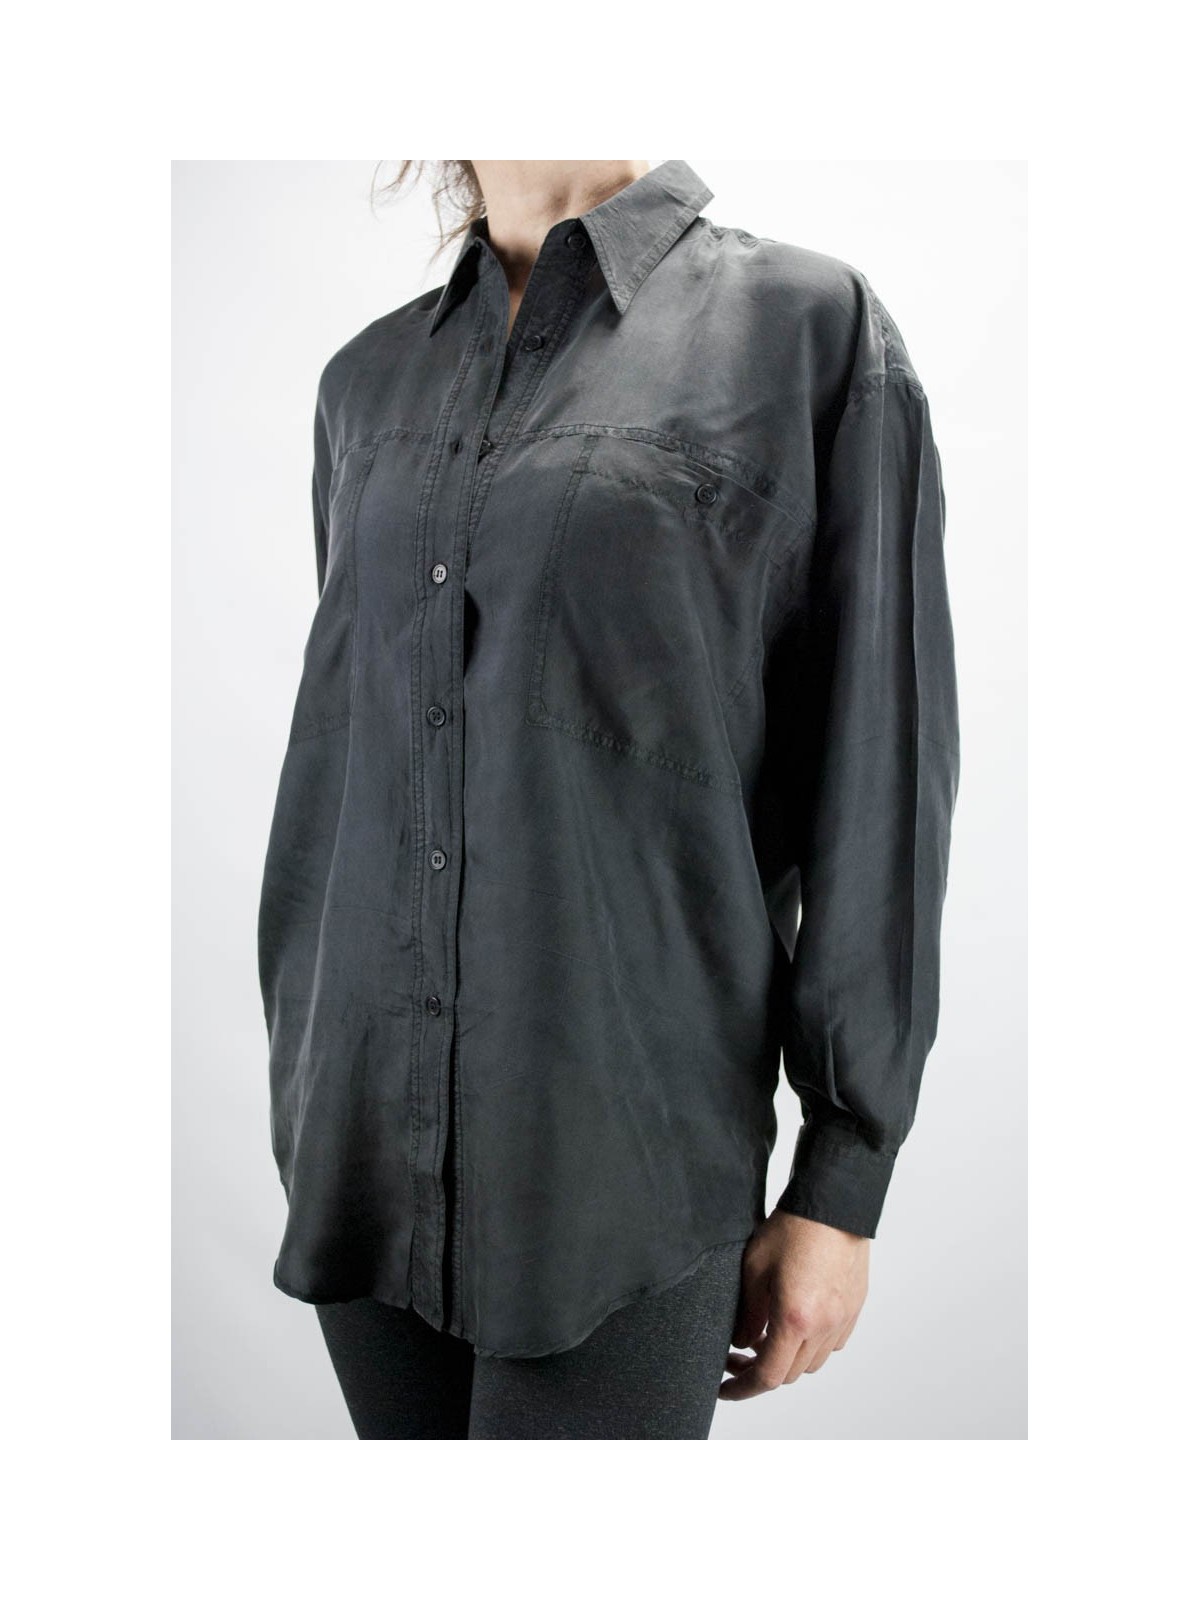 Shirt Of Pure Silk Stonewash Black Tintaunita - S - Long-Sleeve